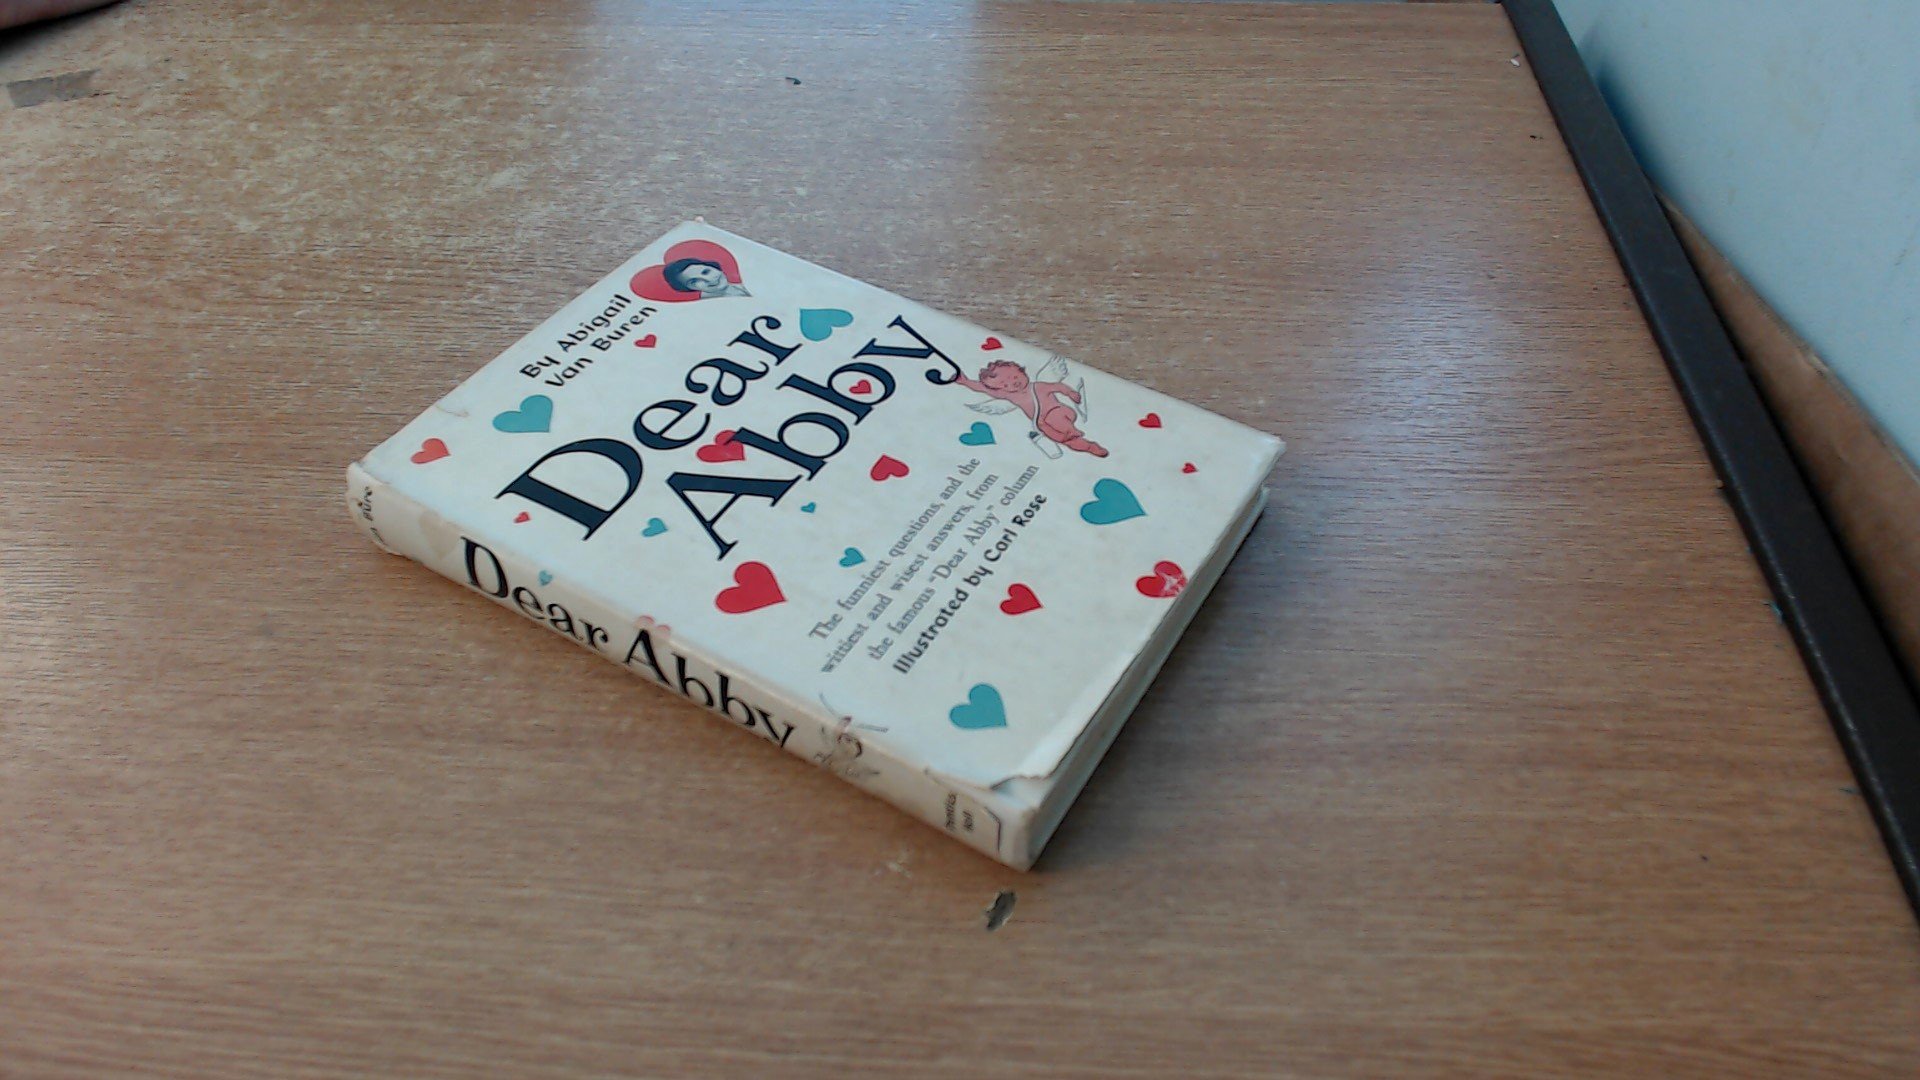 Dear Abby - Van Buren, Abagail - Hardcover - Good - Picture 1 of 1